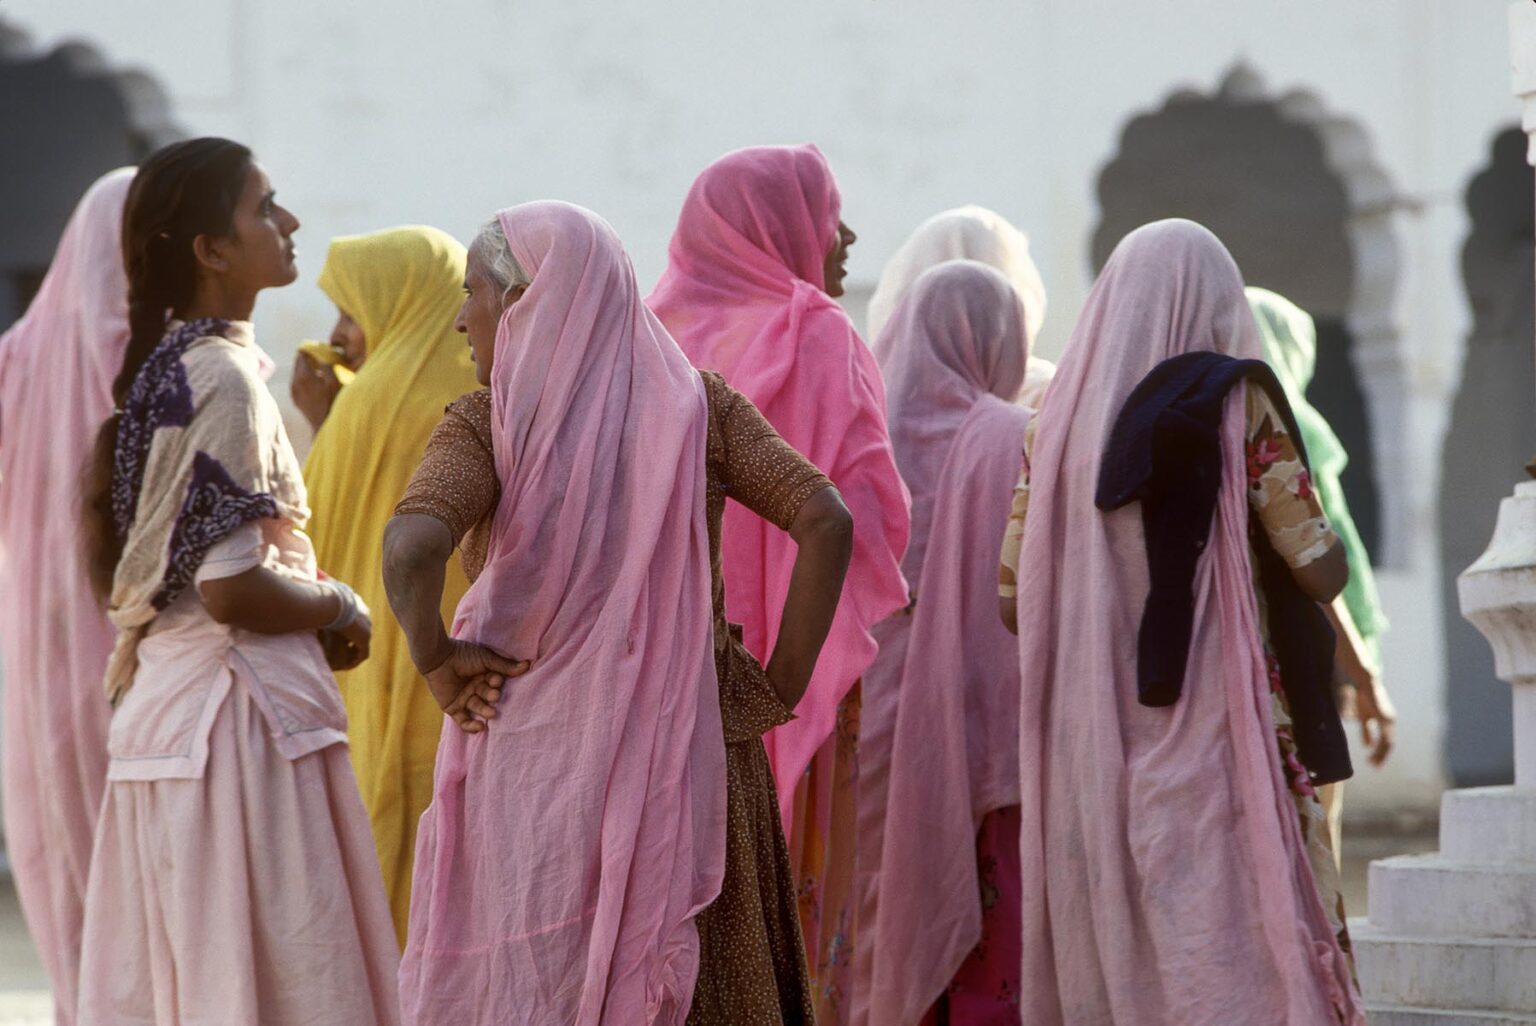 RAJASTHANI WOMEN in pink SARIS visit a TEMPLE at the PUSHKAR CAMEL FAIR - RAJASTHAN, INDIA